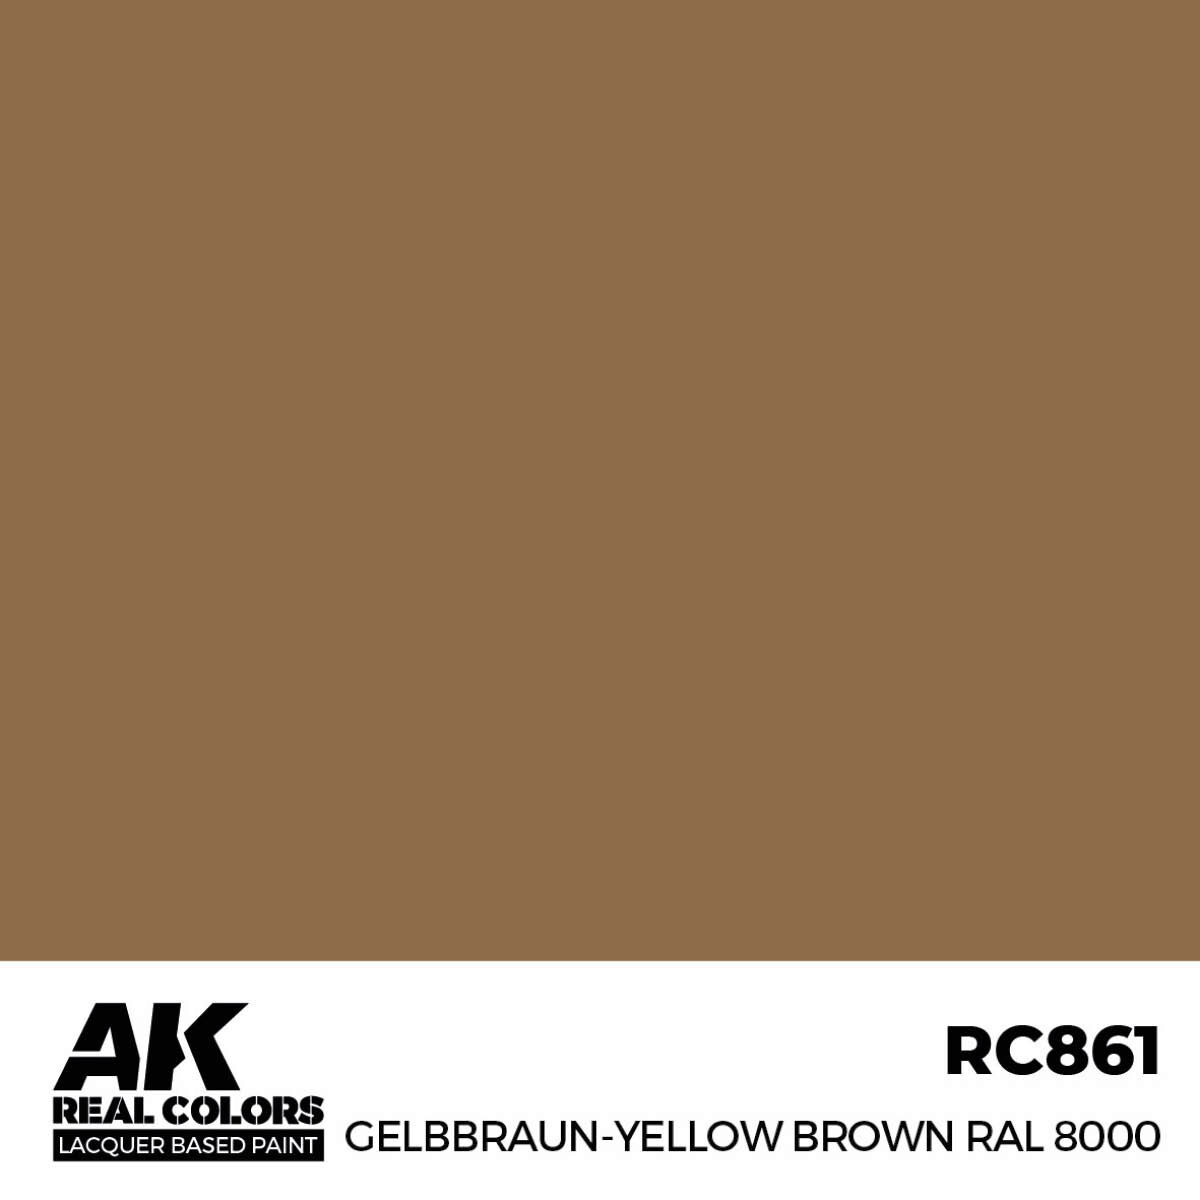 AK RC861 Real Colors Gelbbraun-Yellow Brown RAL 8000 17 ml.